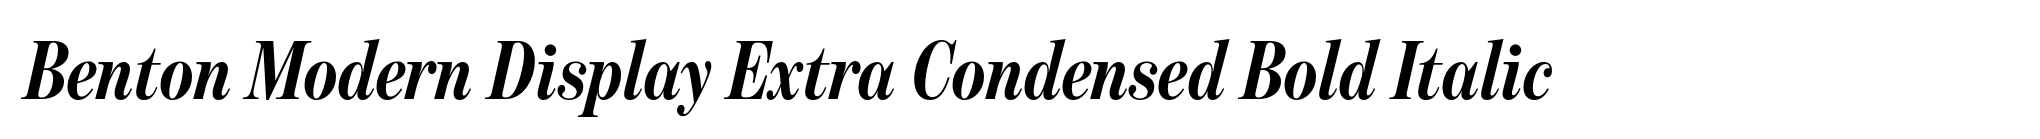 Benton Modern Display Extra Condensed Bold Italic image